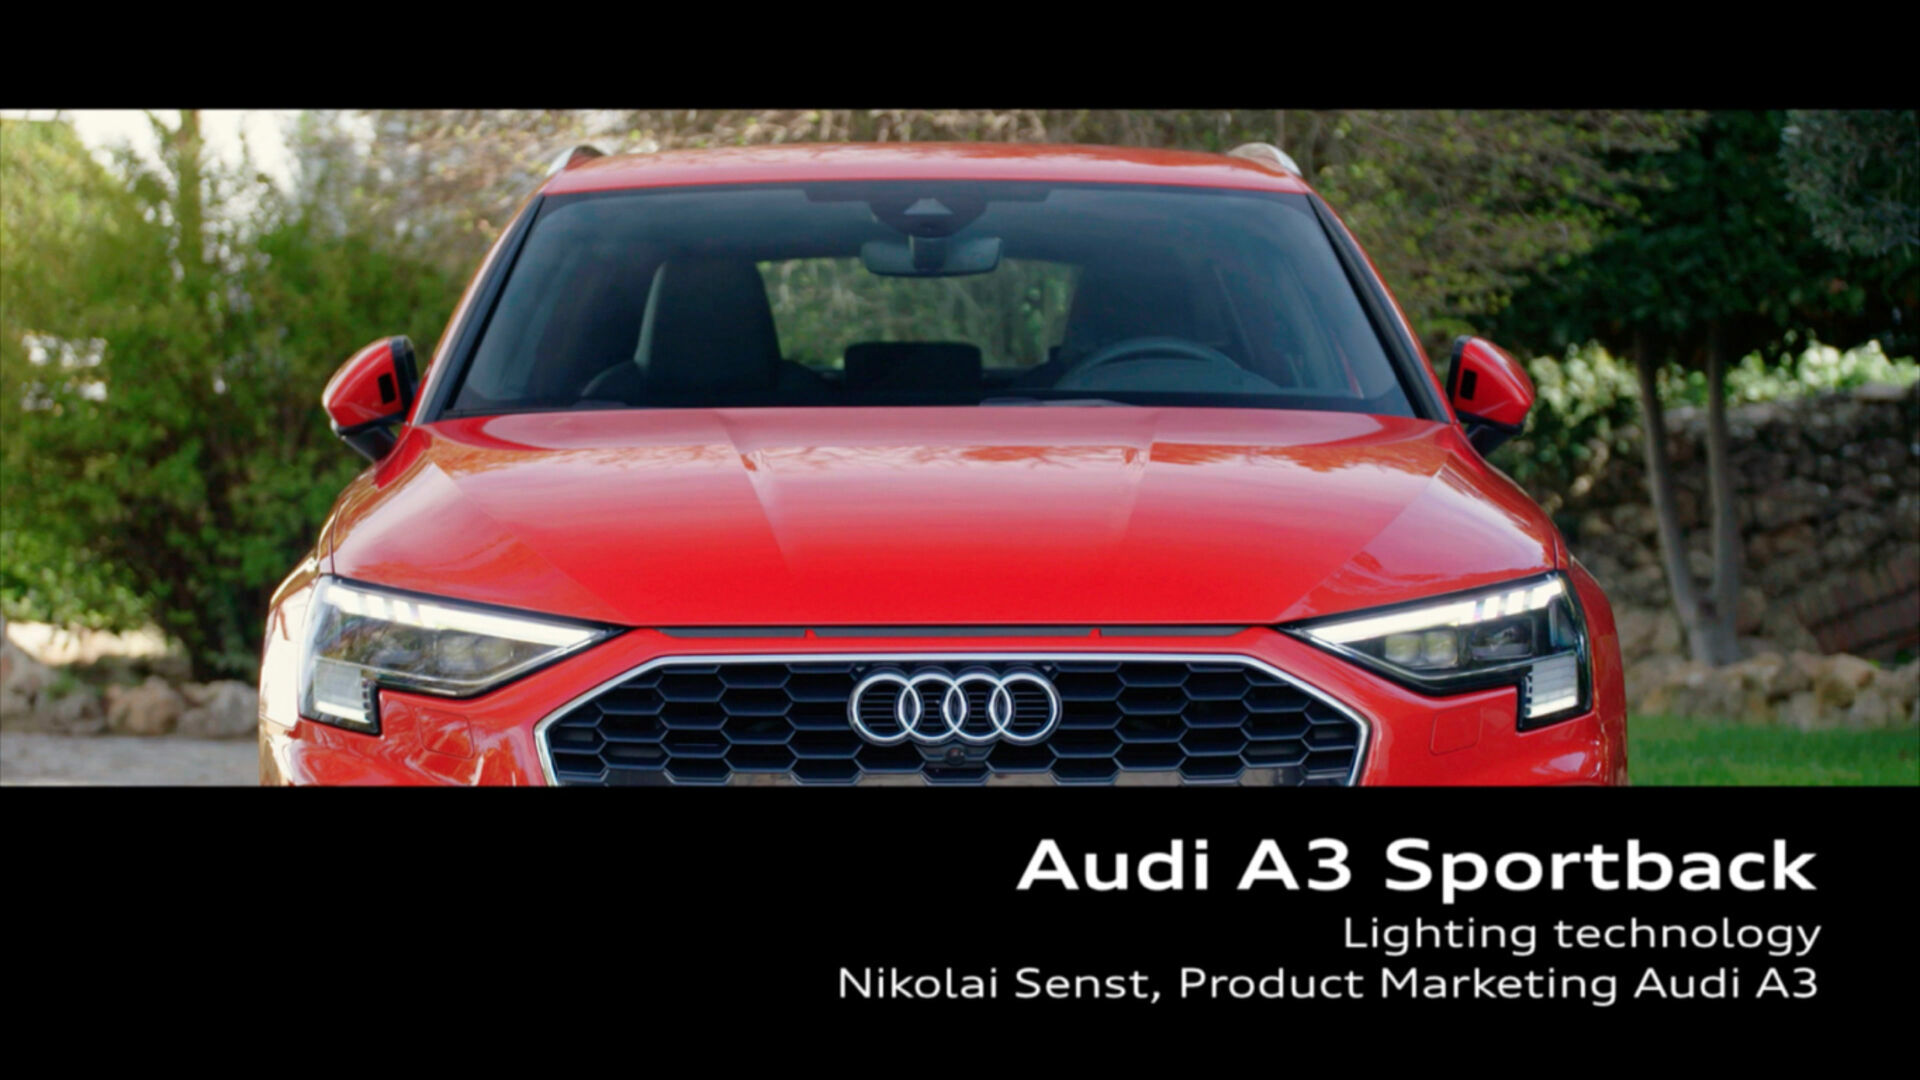 Footage: Audi A3 Sportback – lighting technology